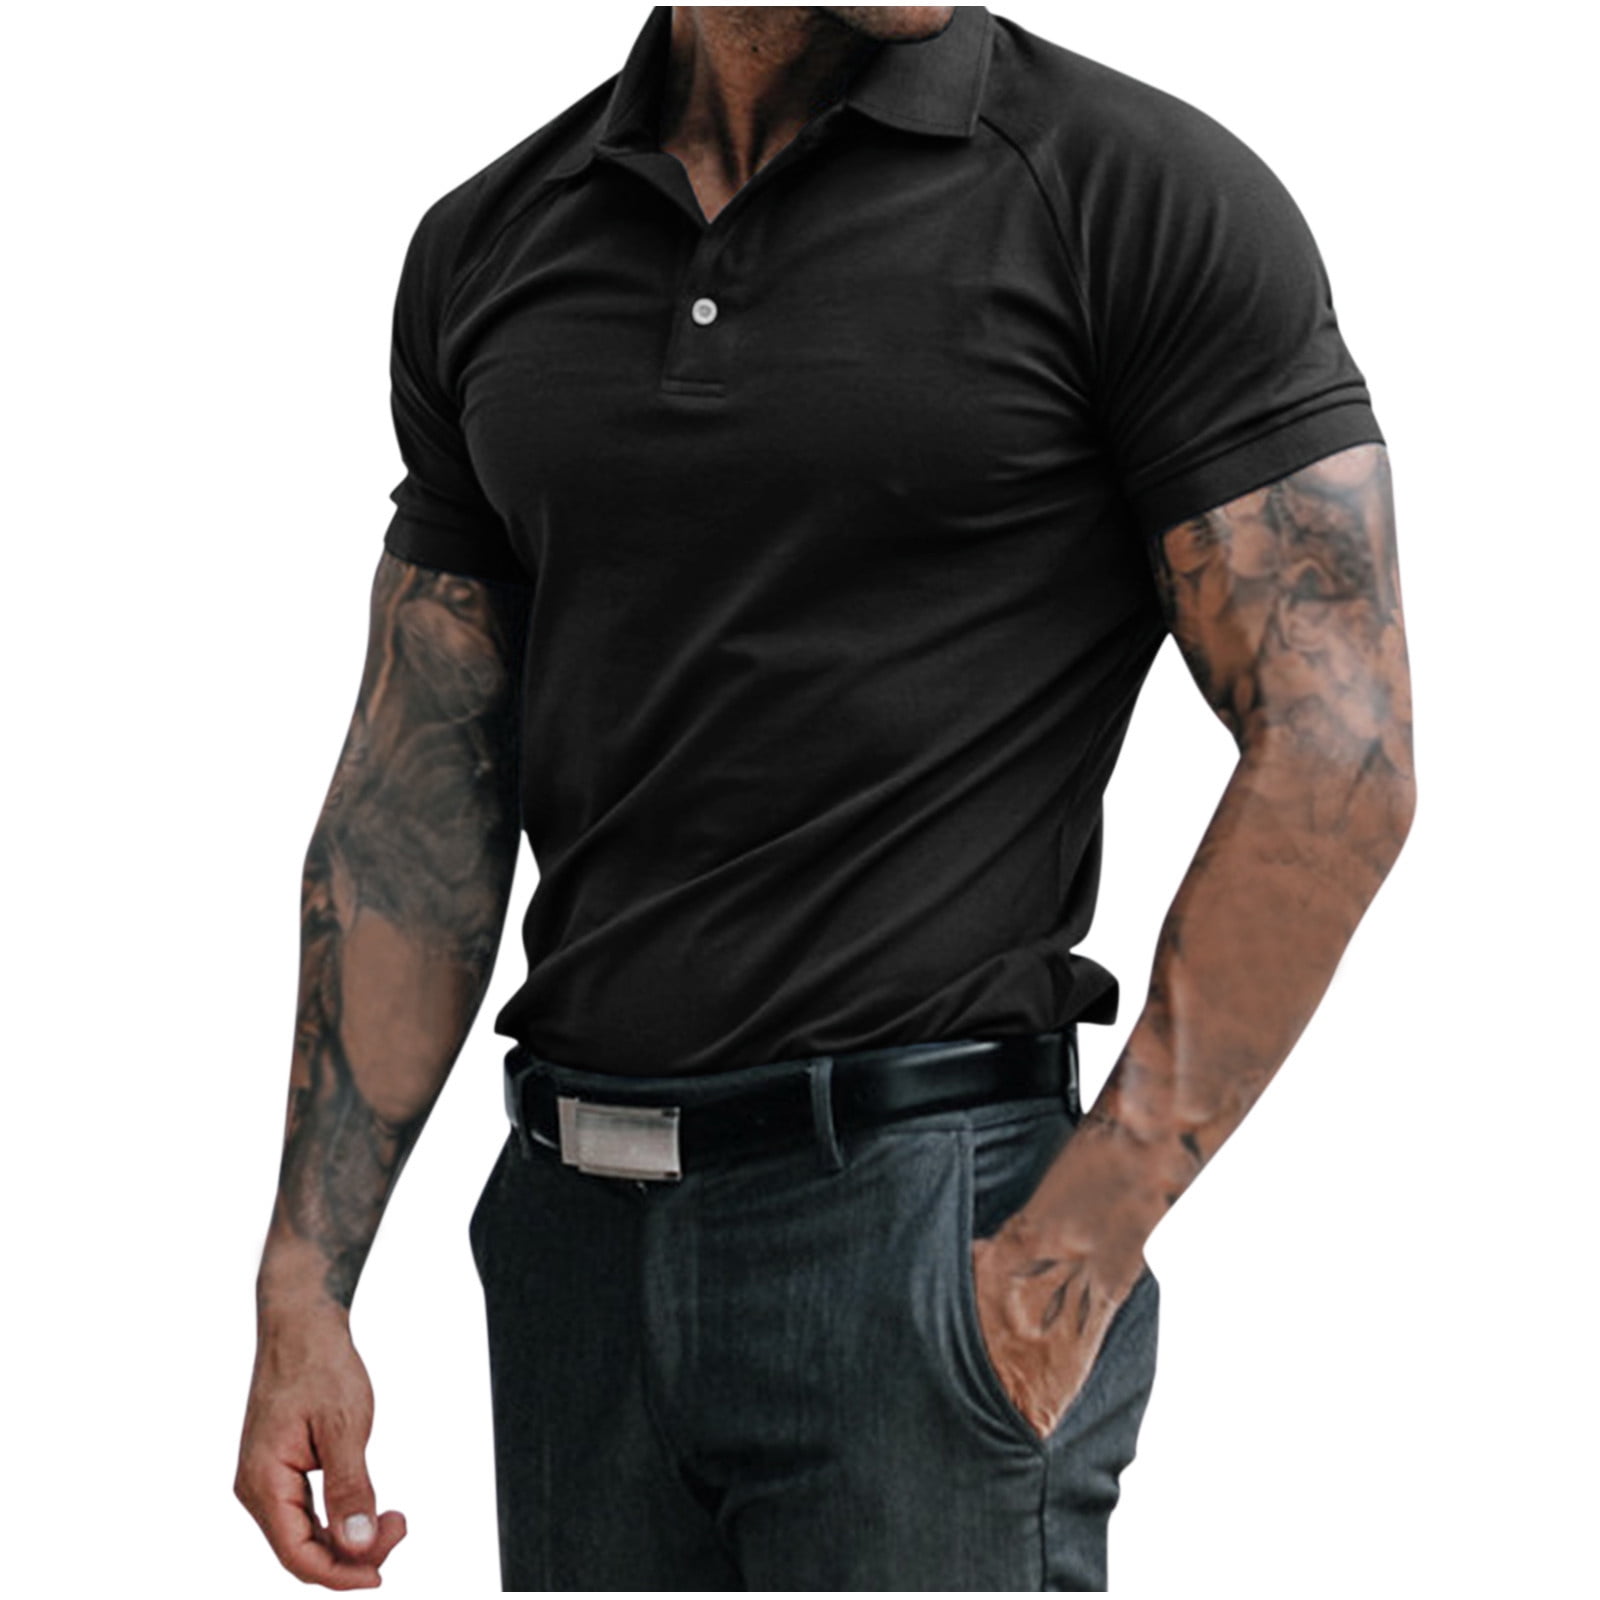 Polo Shirt for Men Short Sleeve Tops Black L - Walmart.com